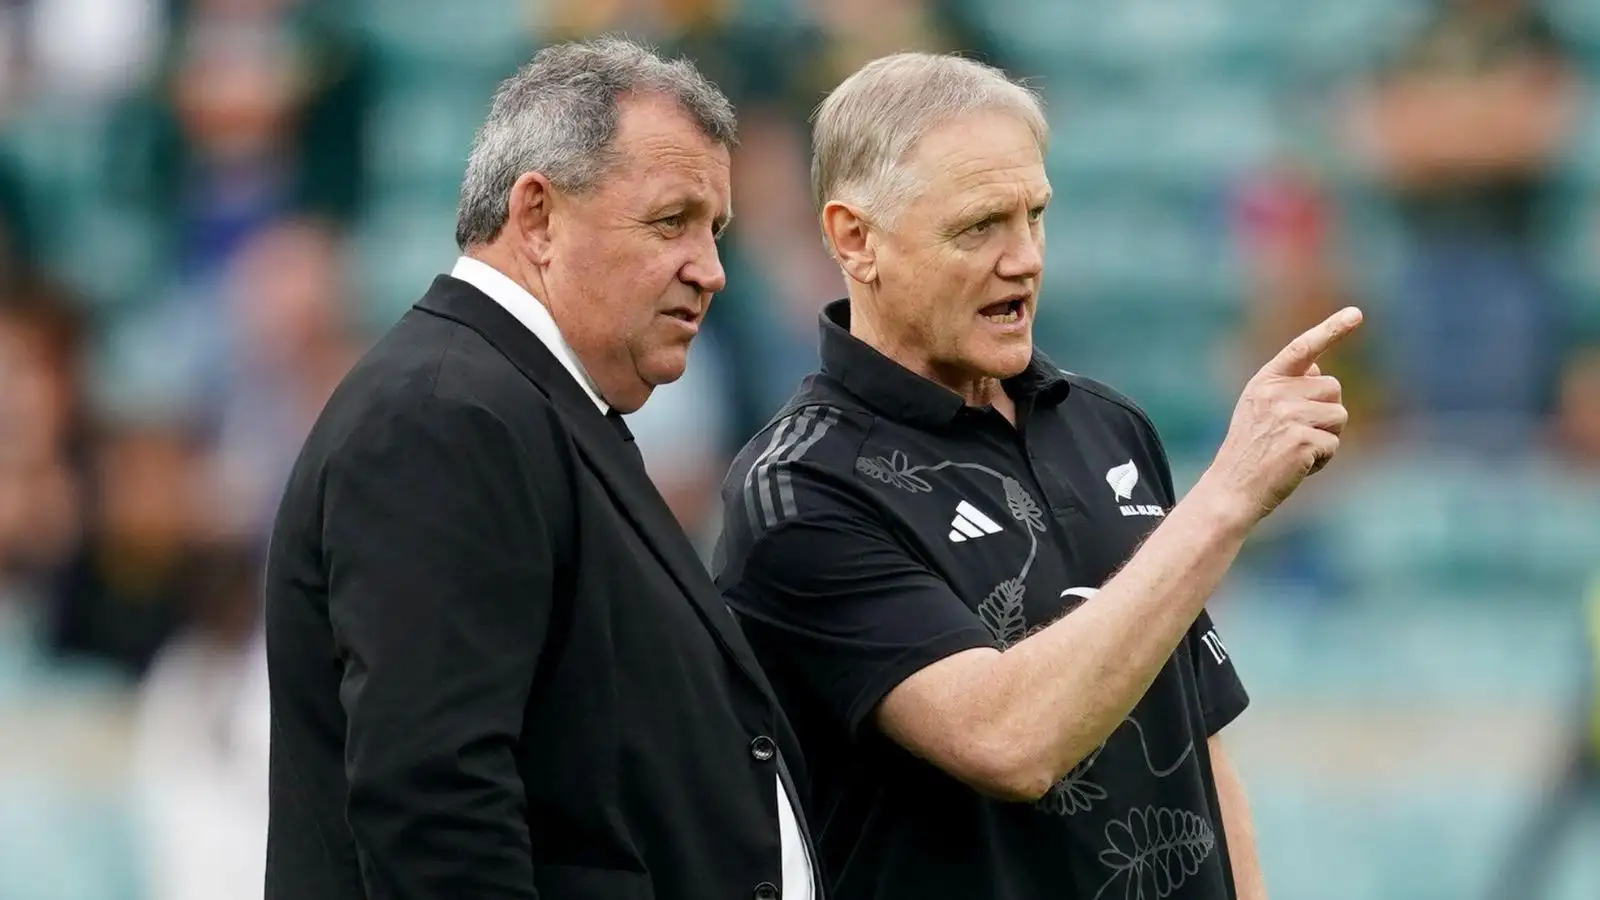 All Blacks Head Coach Ian Foster interacts with New Zealand Coach Joe Schmidt.